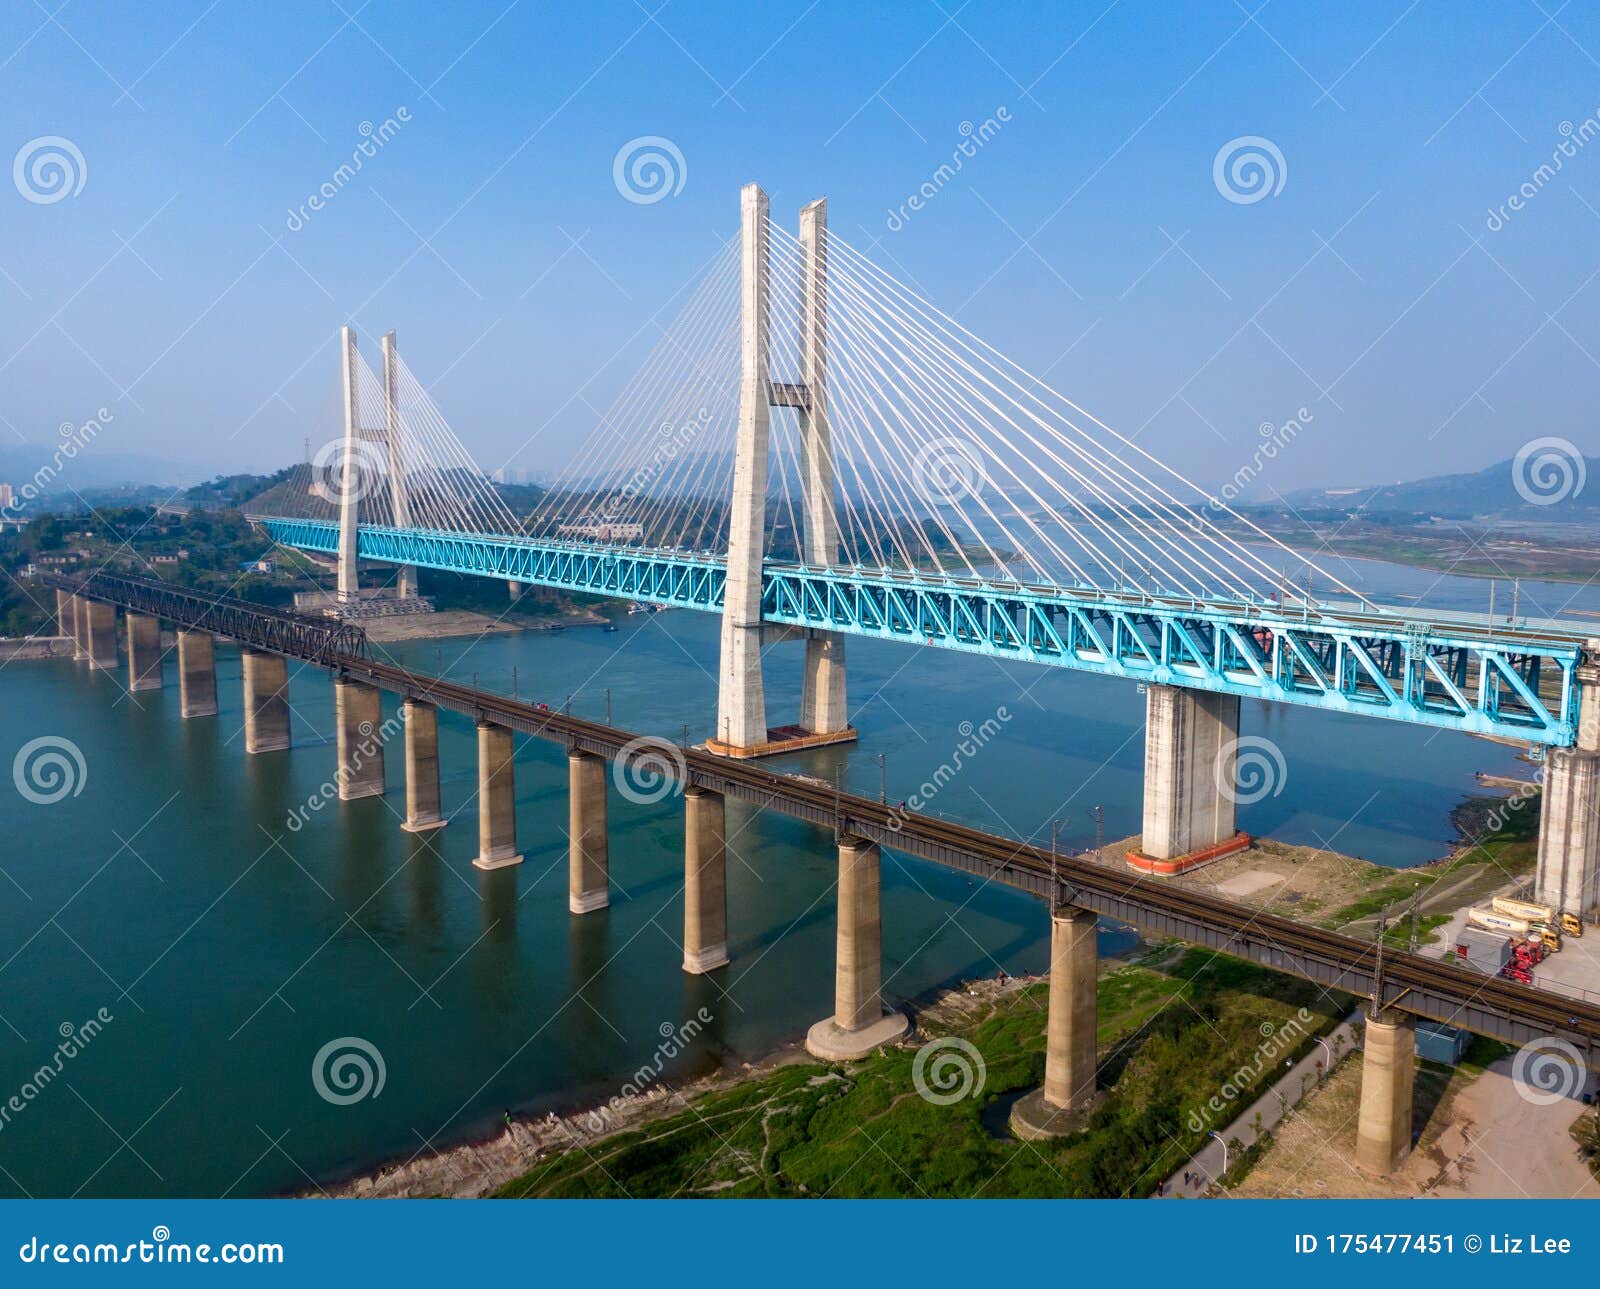 bird view of old and new baishatuo yangtze river railway bridge under blue sky